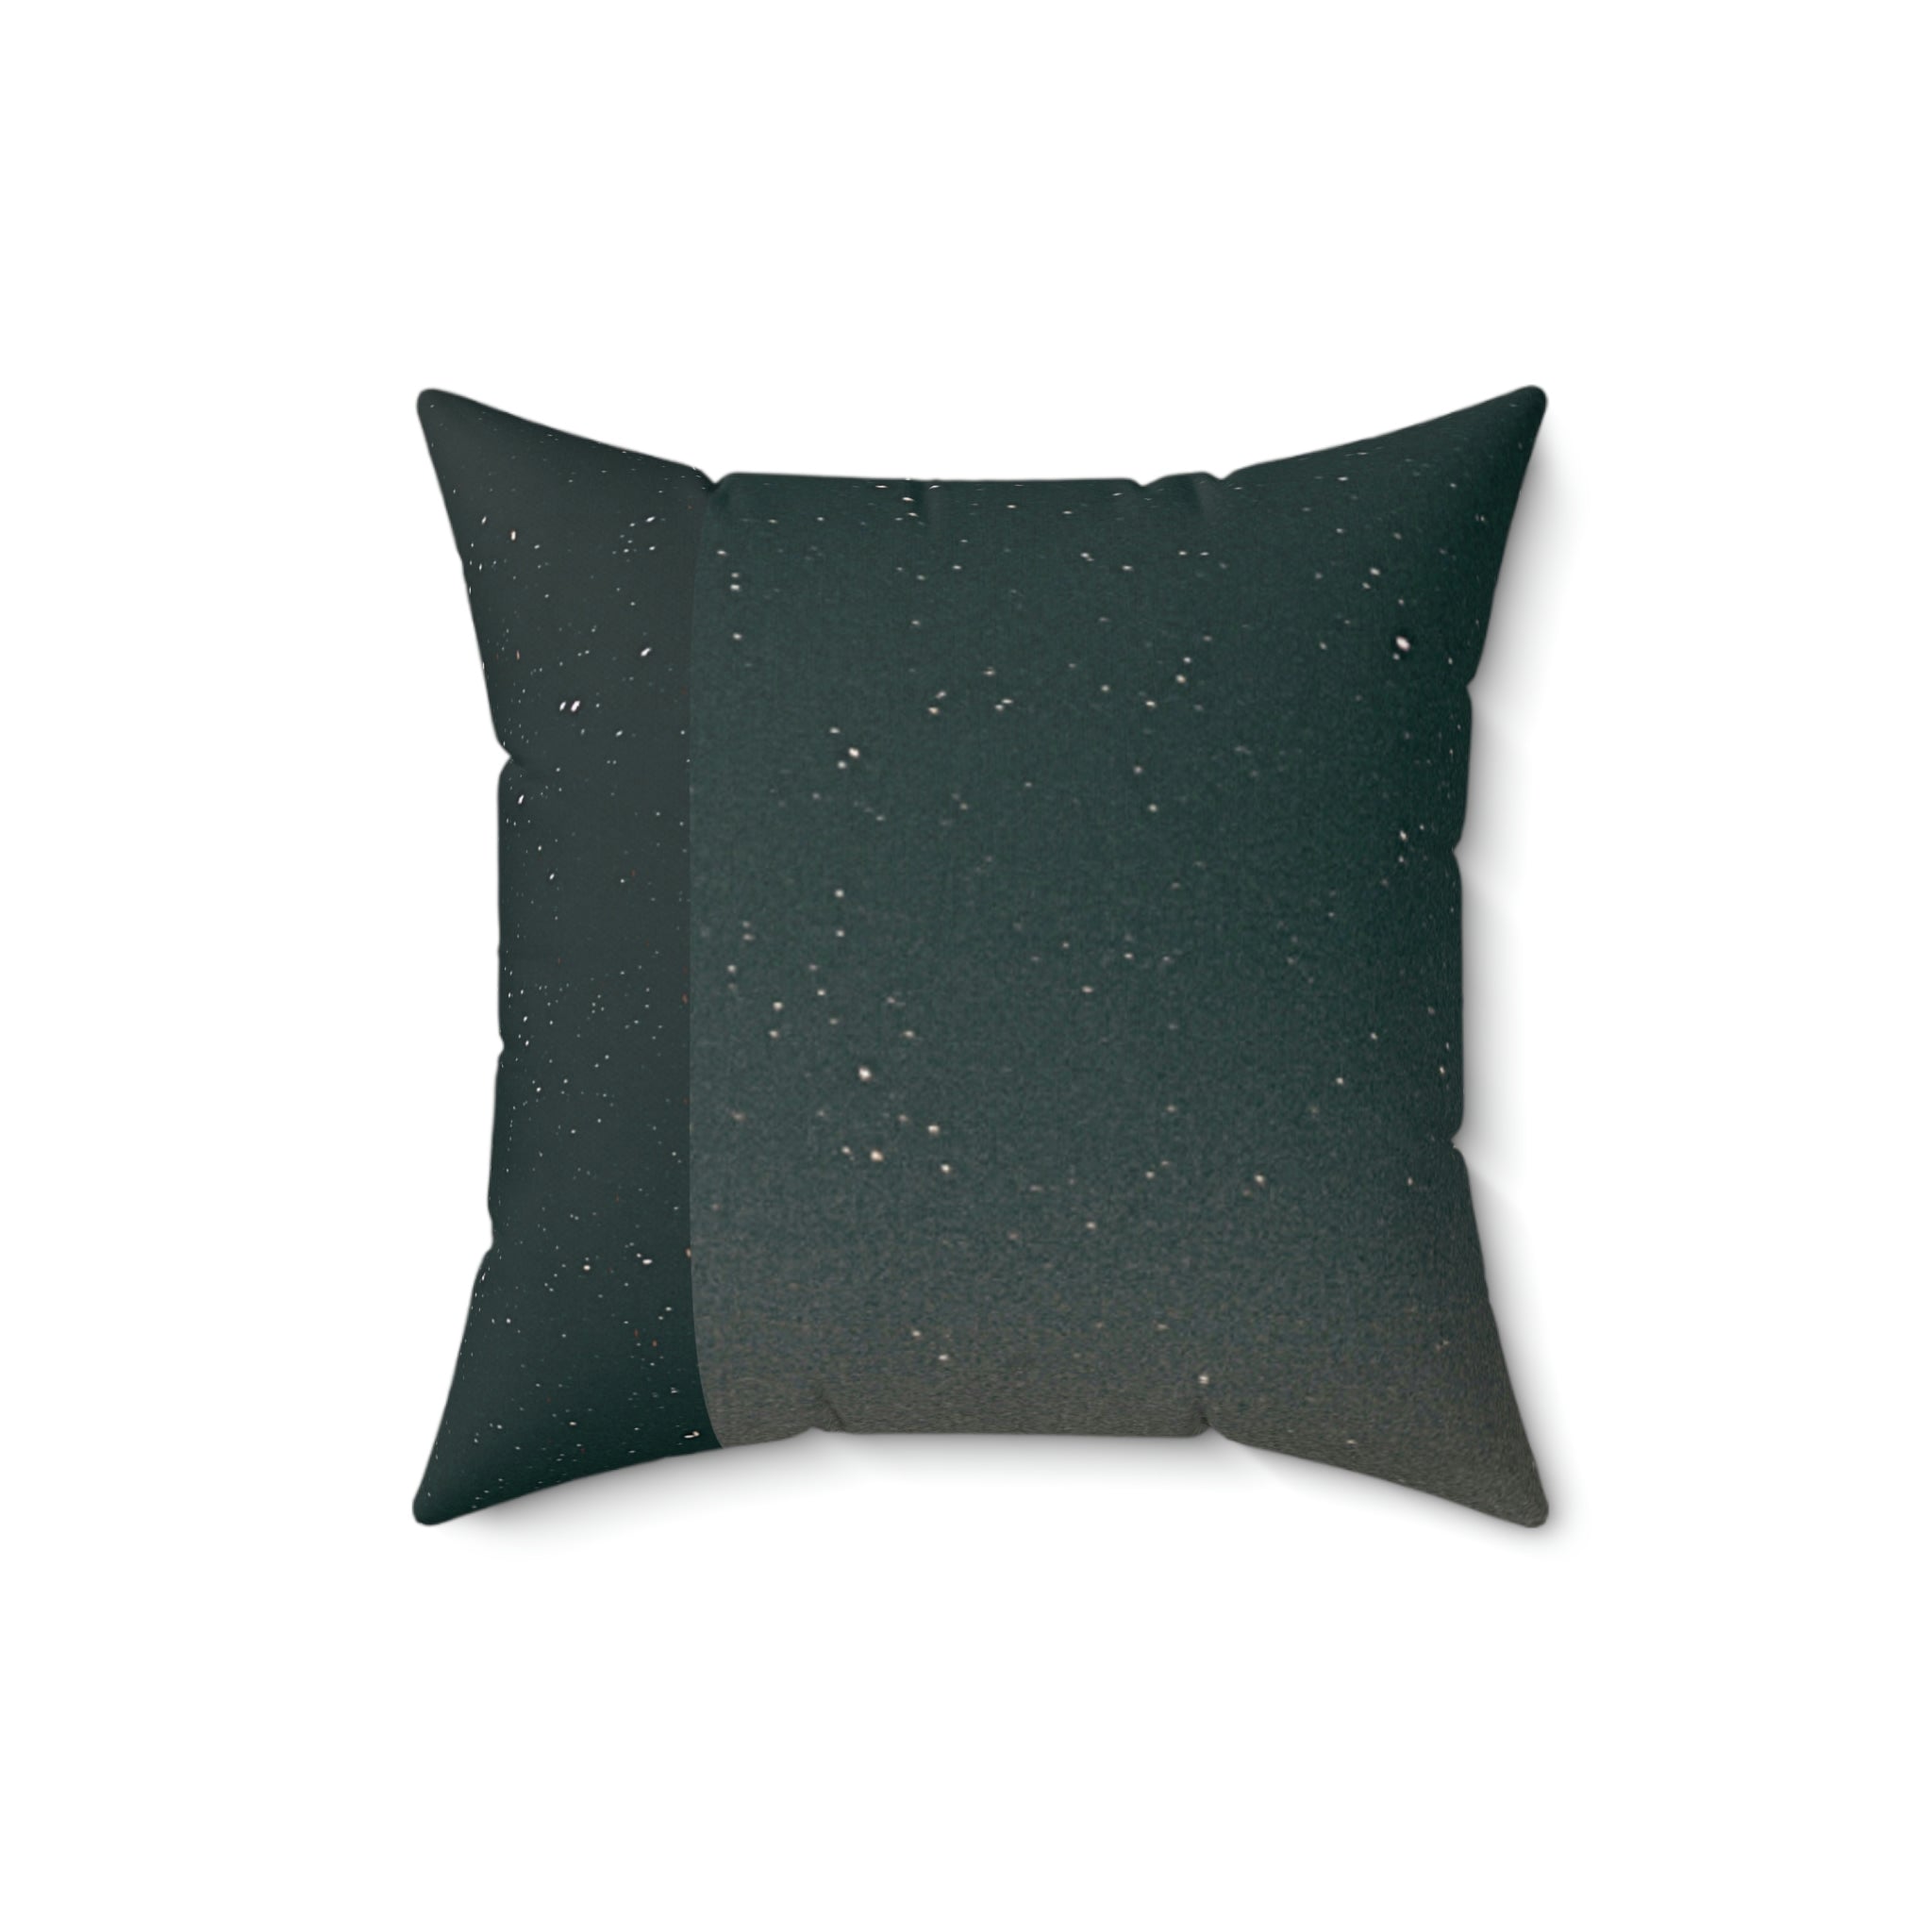 Reality/Spun Polyester Square Pillow